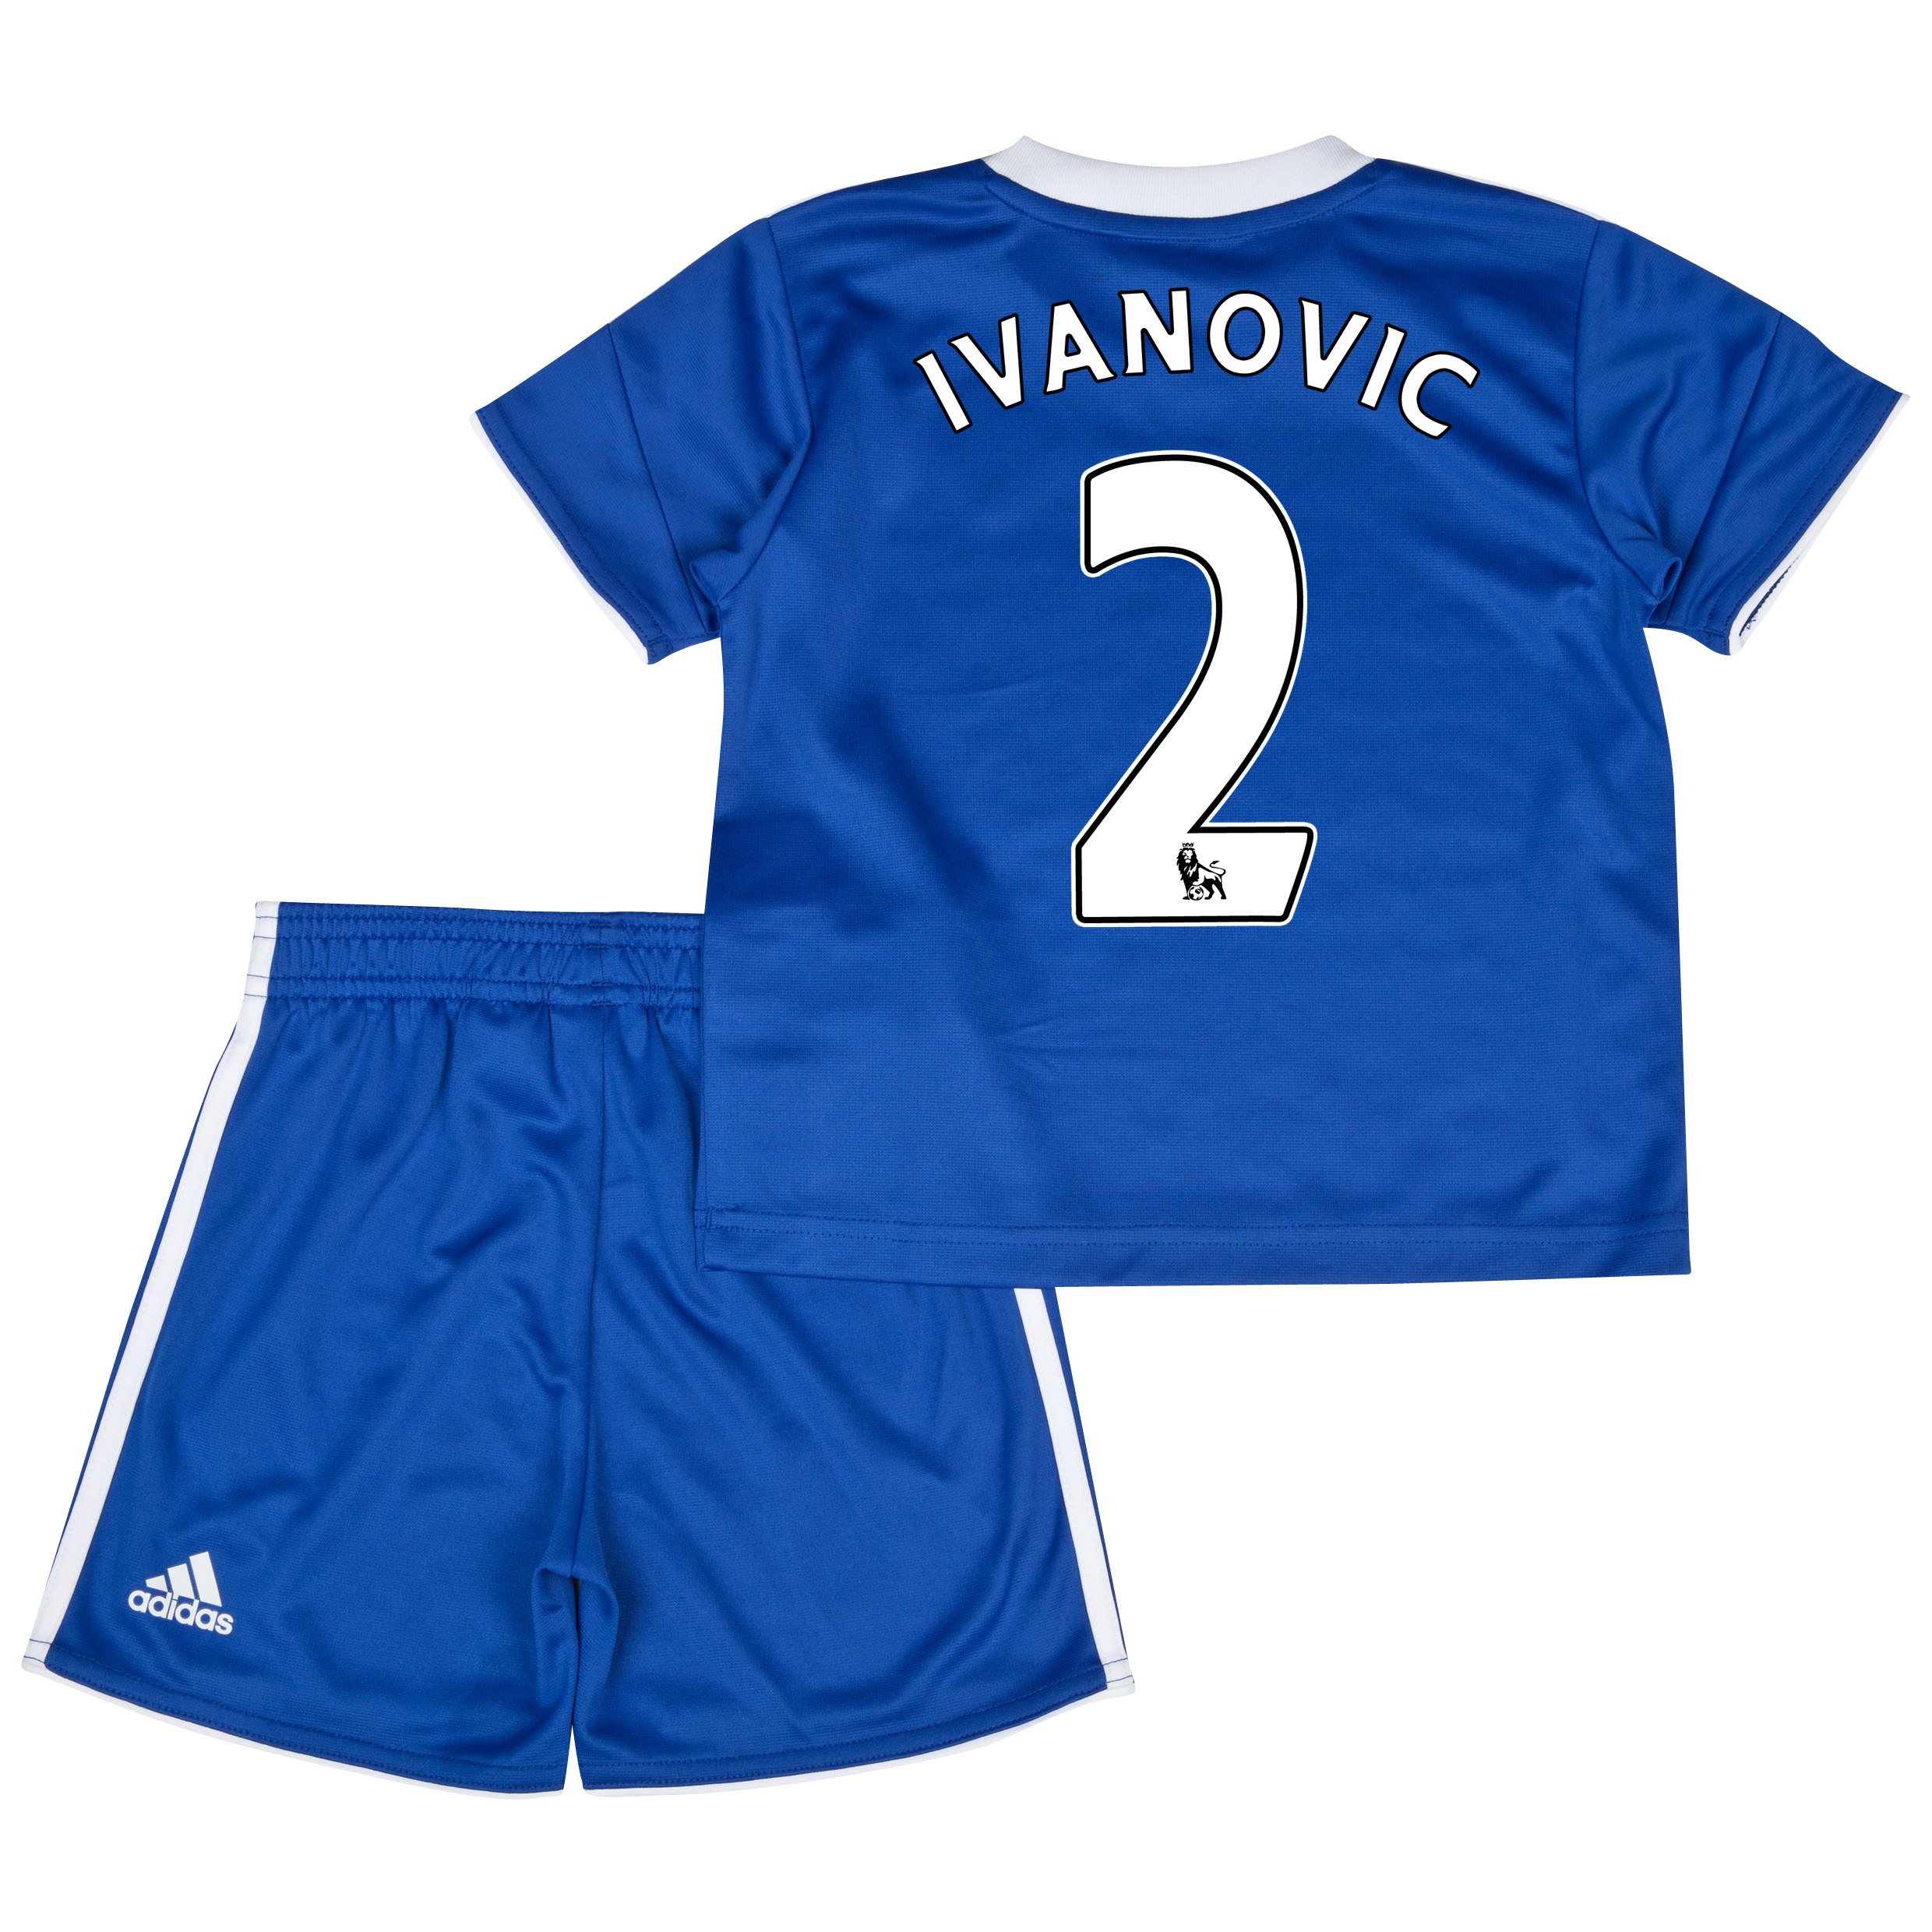 Chelsea Home Mini Kit 2013/14 with Ivanovic 2 printing